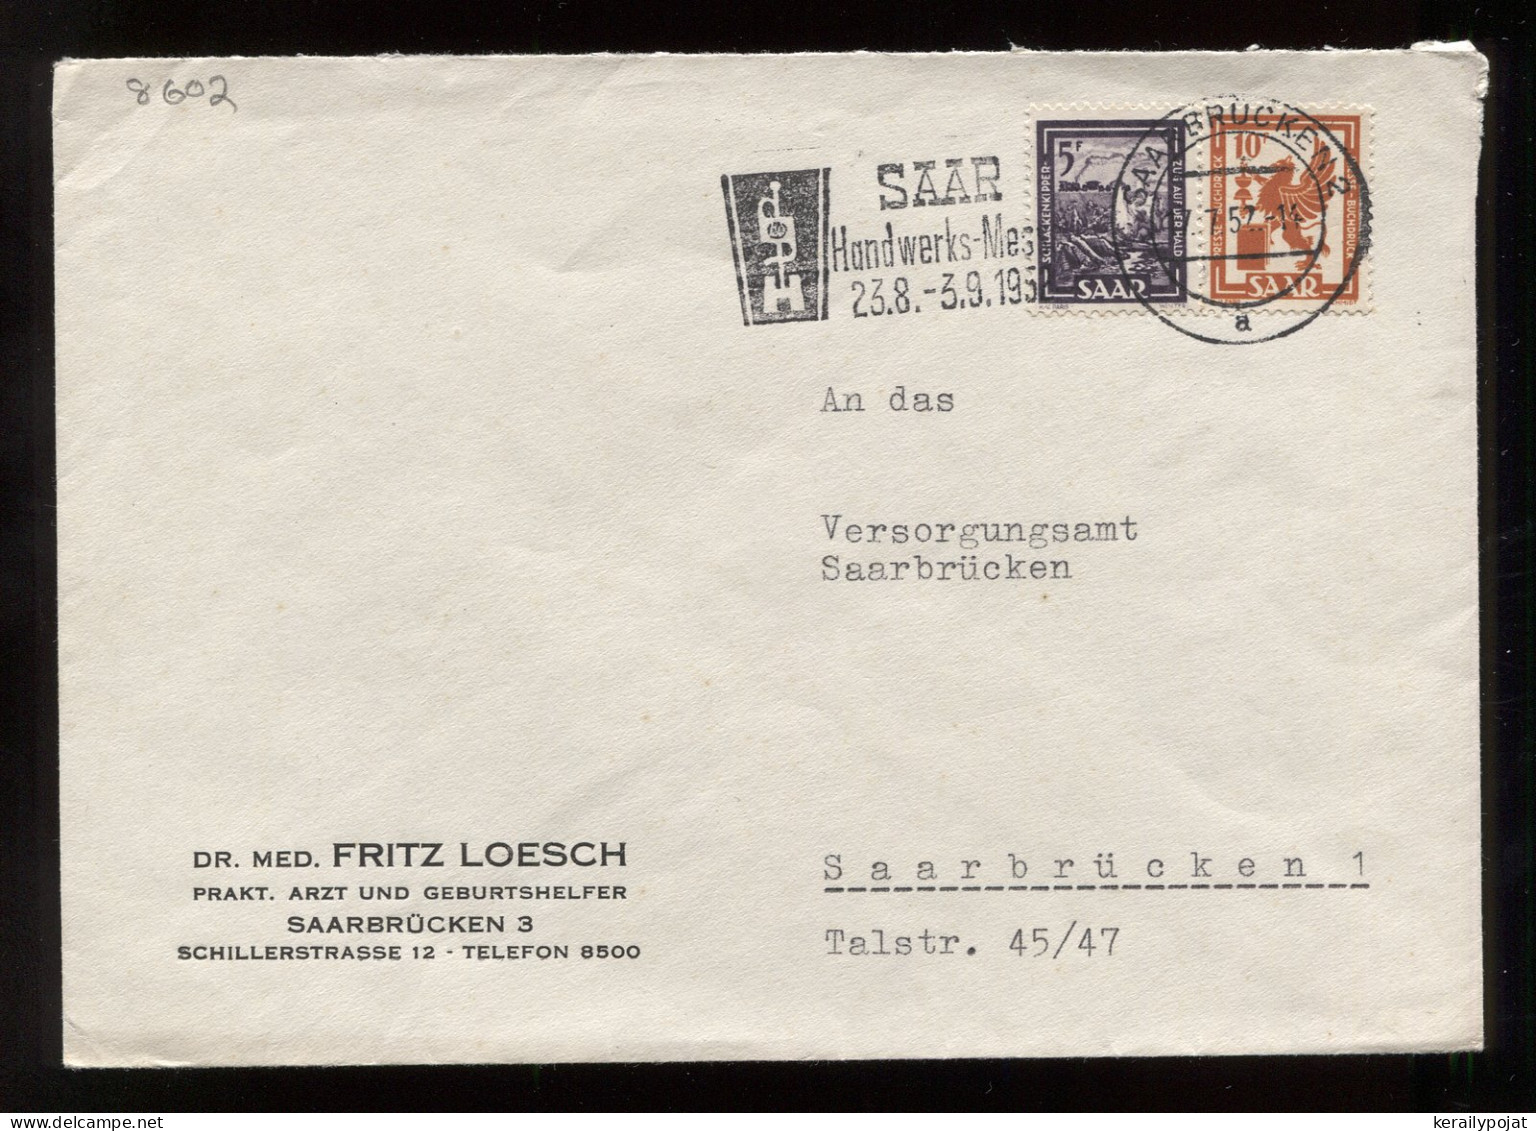 Saar 1957 Saarbrucken 2 Slogan Cancellation Cover__(8602) - Briefe U. Dokumente